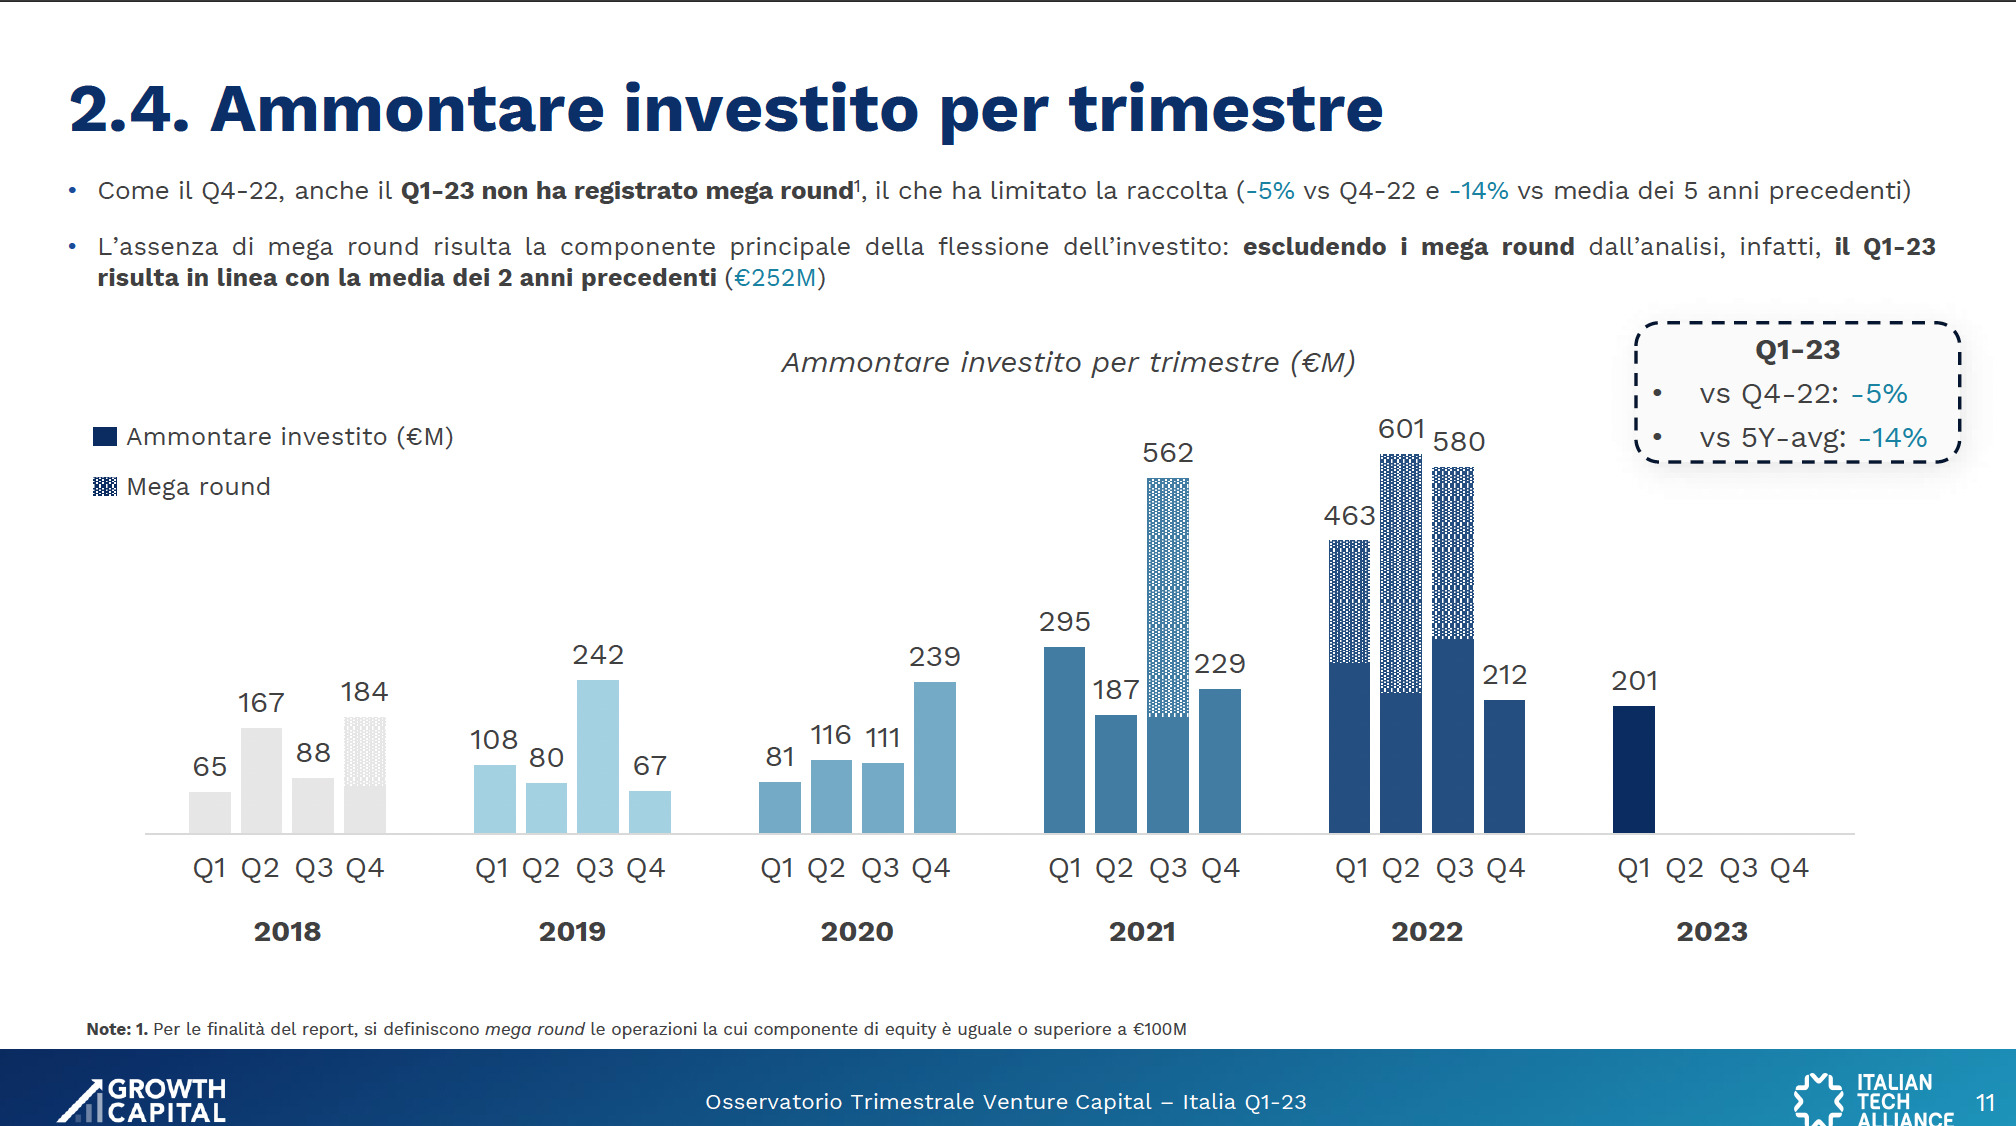 Investimenti in startup in Italia: Q1 2023 a 201 milioni di euro